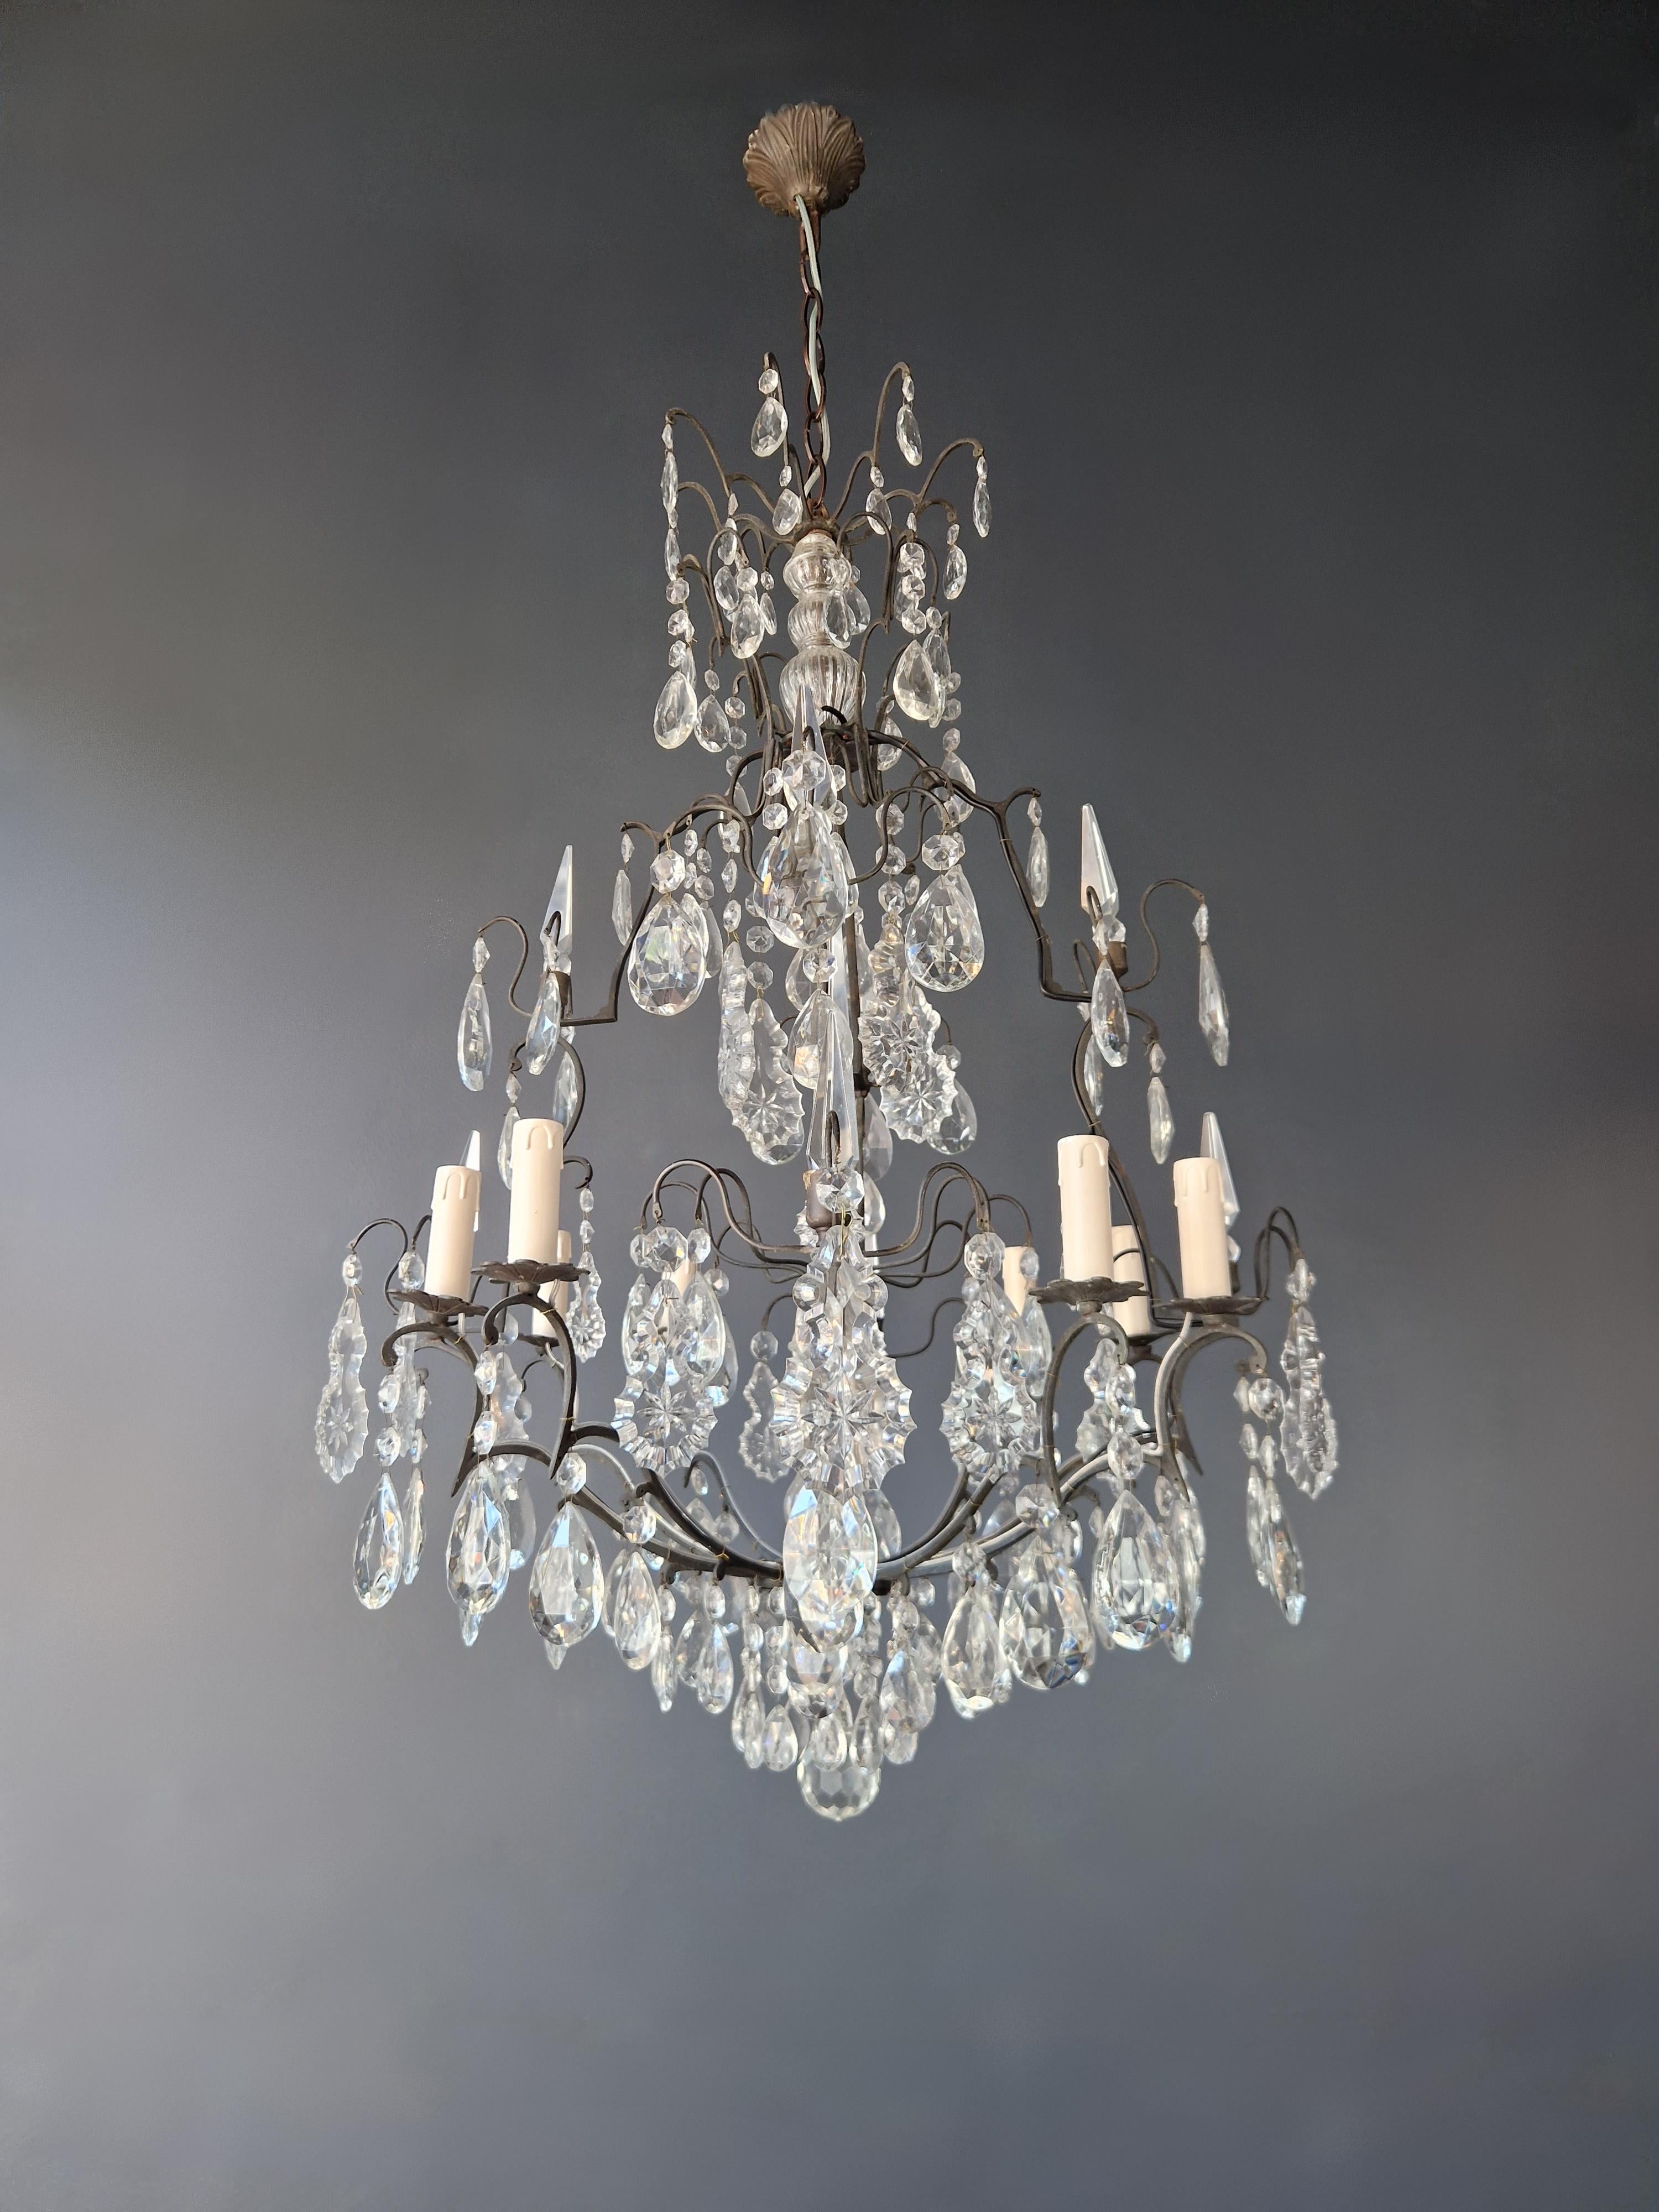 Mid-20th Century Antique French Crystal Chandelier Ceiling Lamp Lustre Art Nouveau Lamp